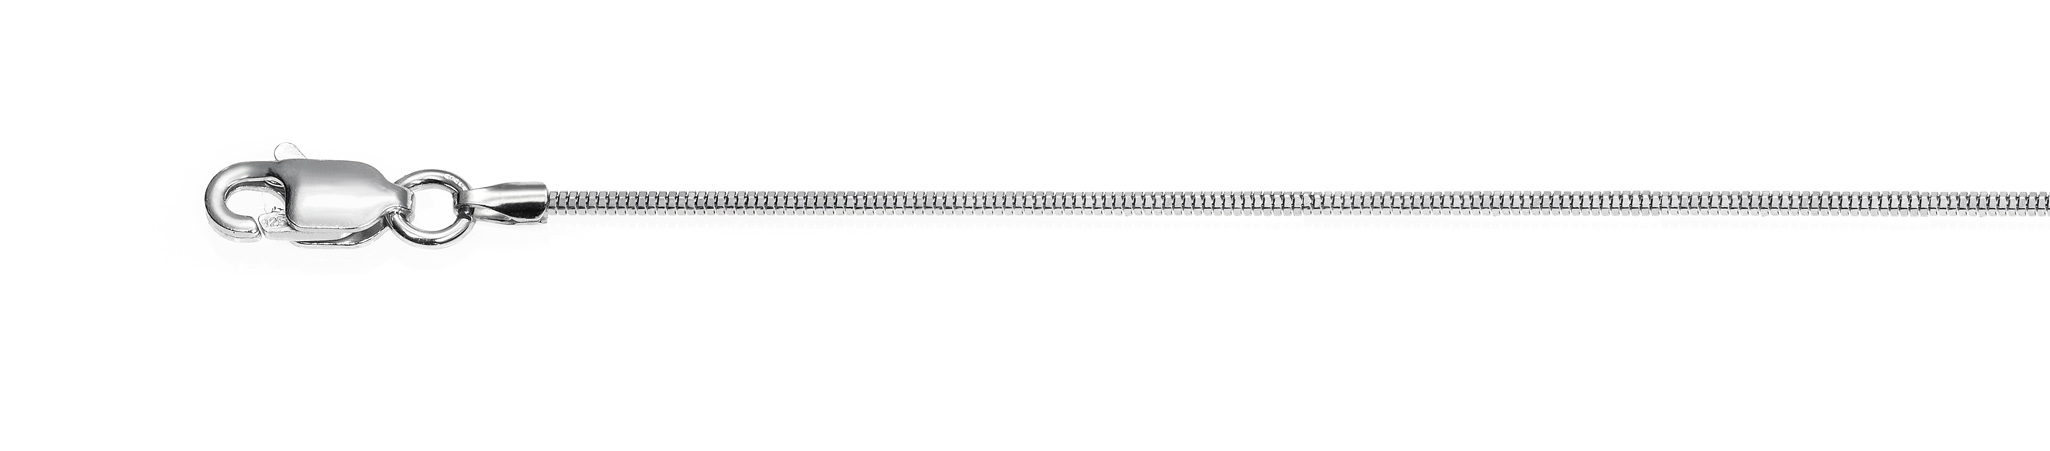 Cadenas de plata rodiadas  - Cola de topo diamantada rodiada - Ancho 1.0 - Ref. 91010.40R